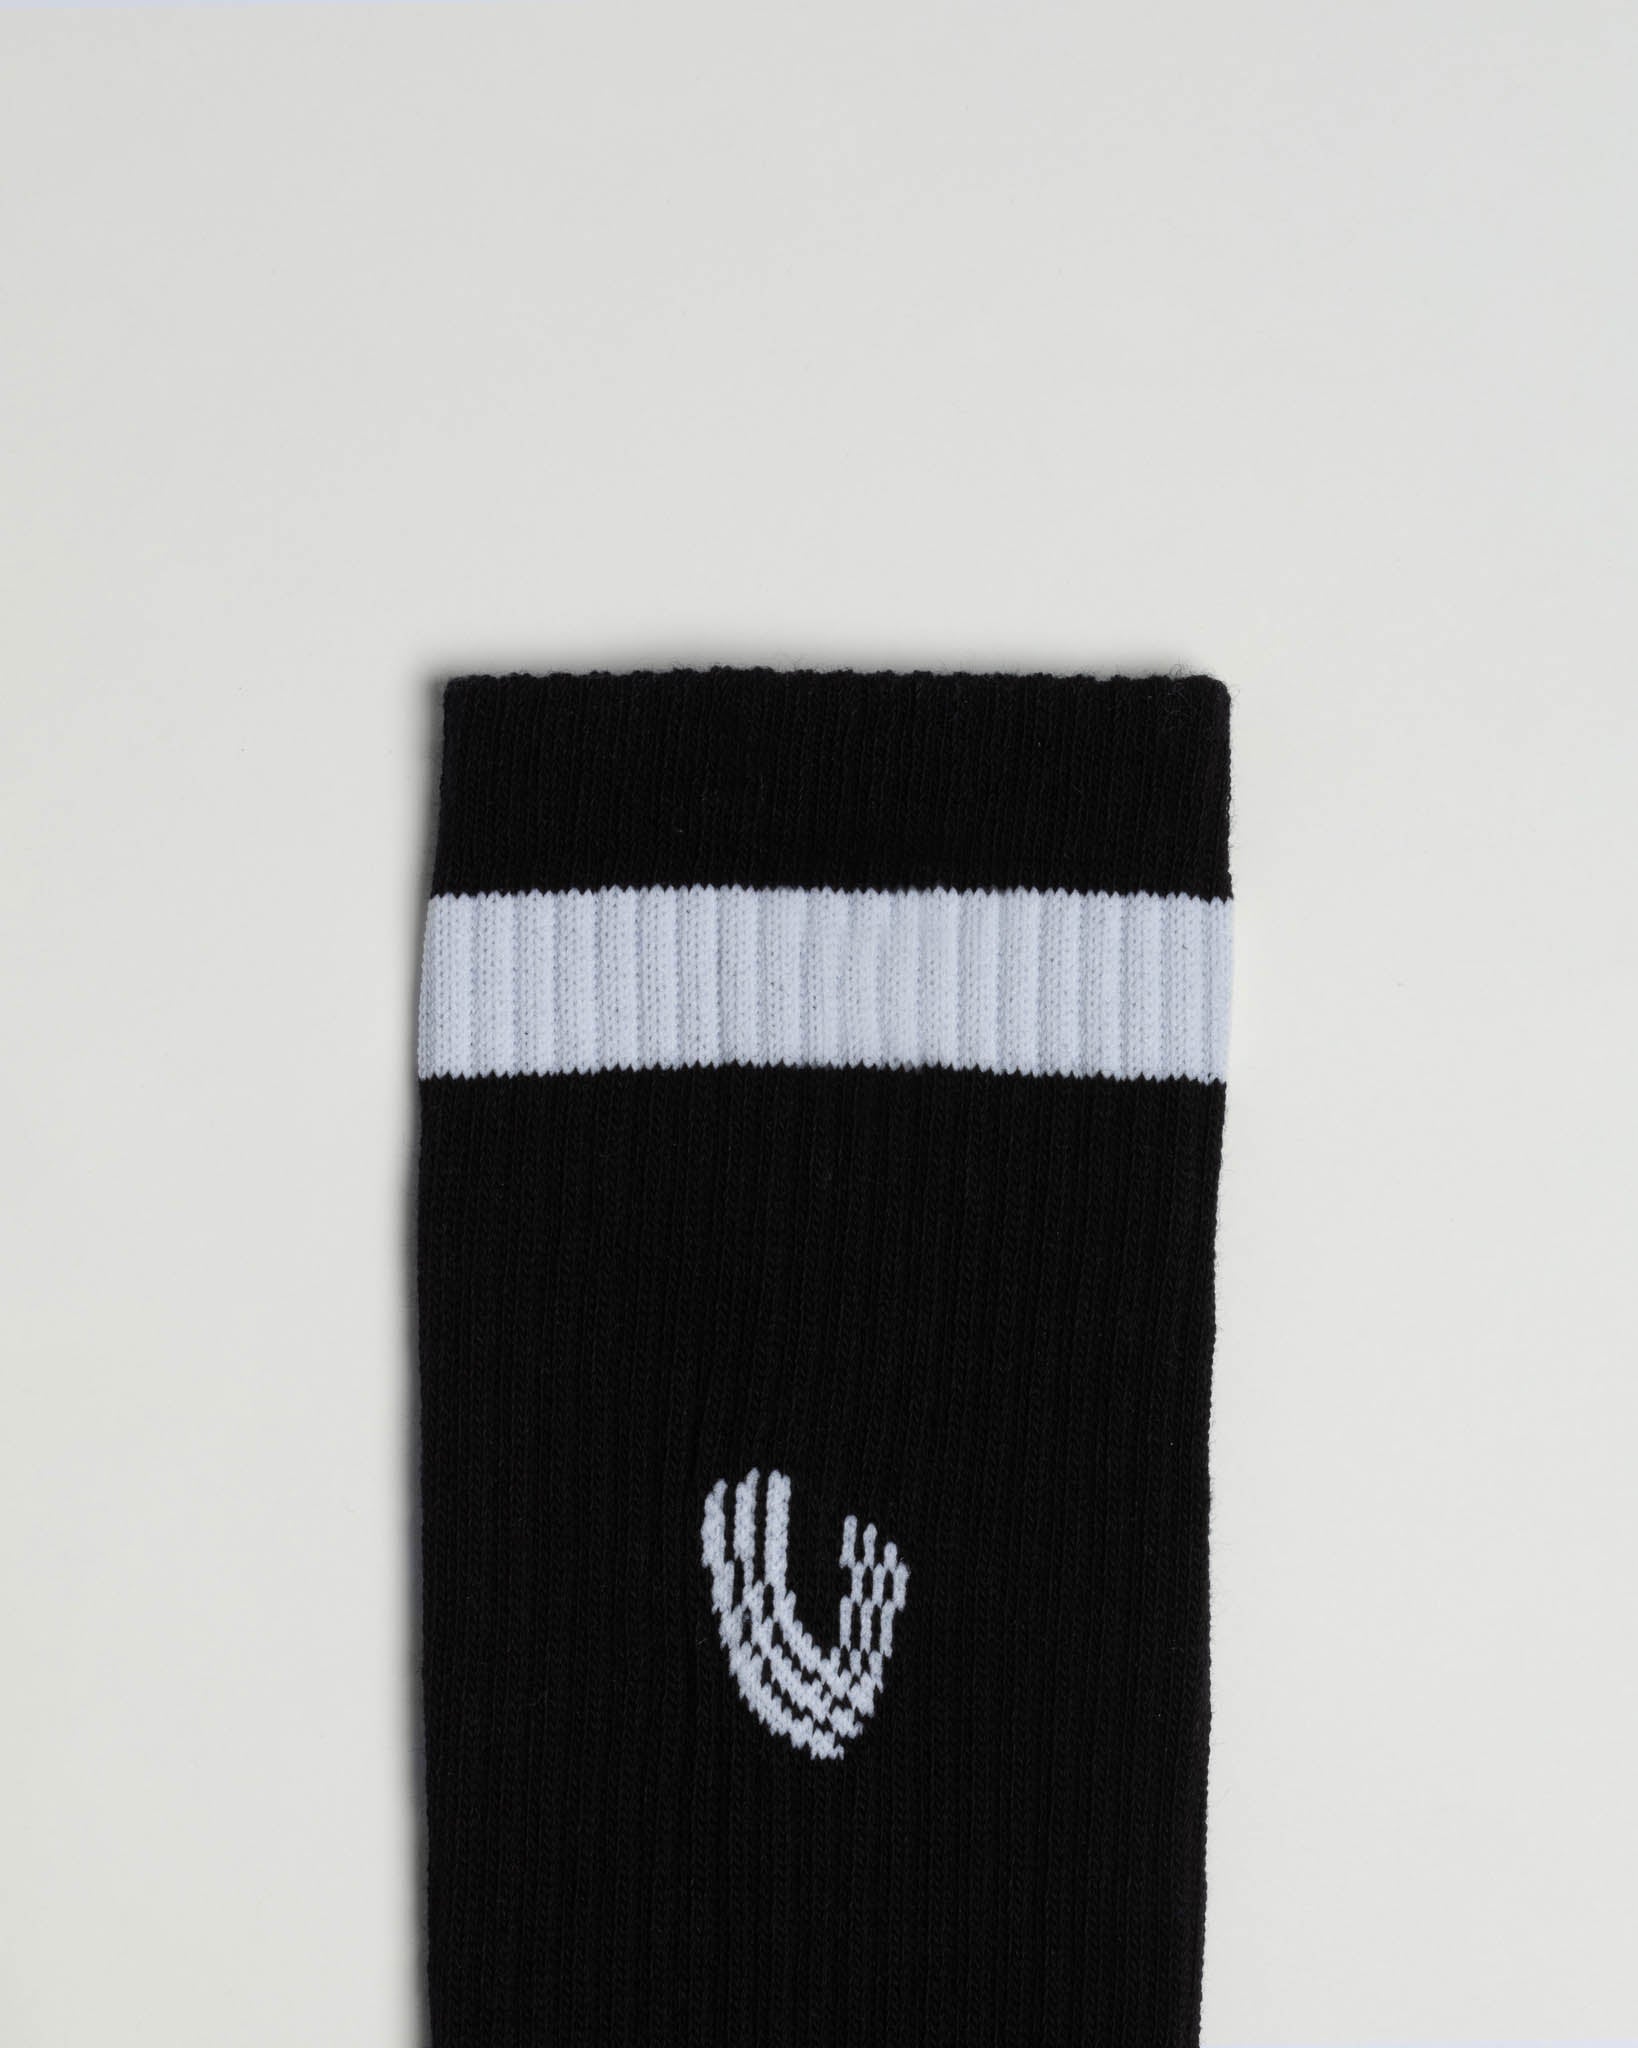 Viento Socks Match Black